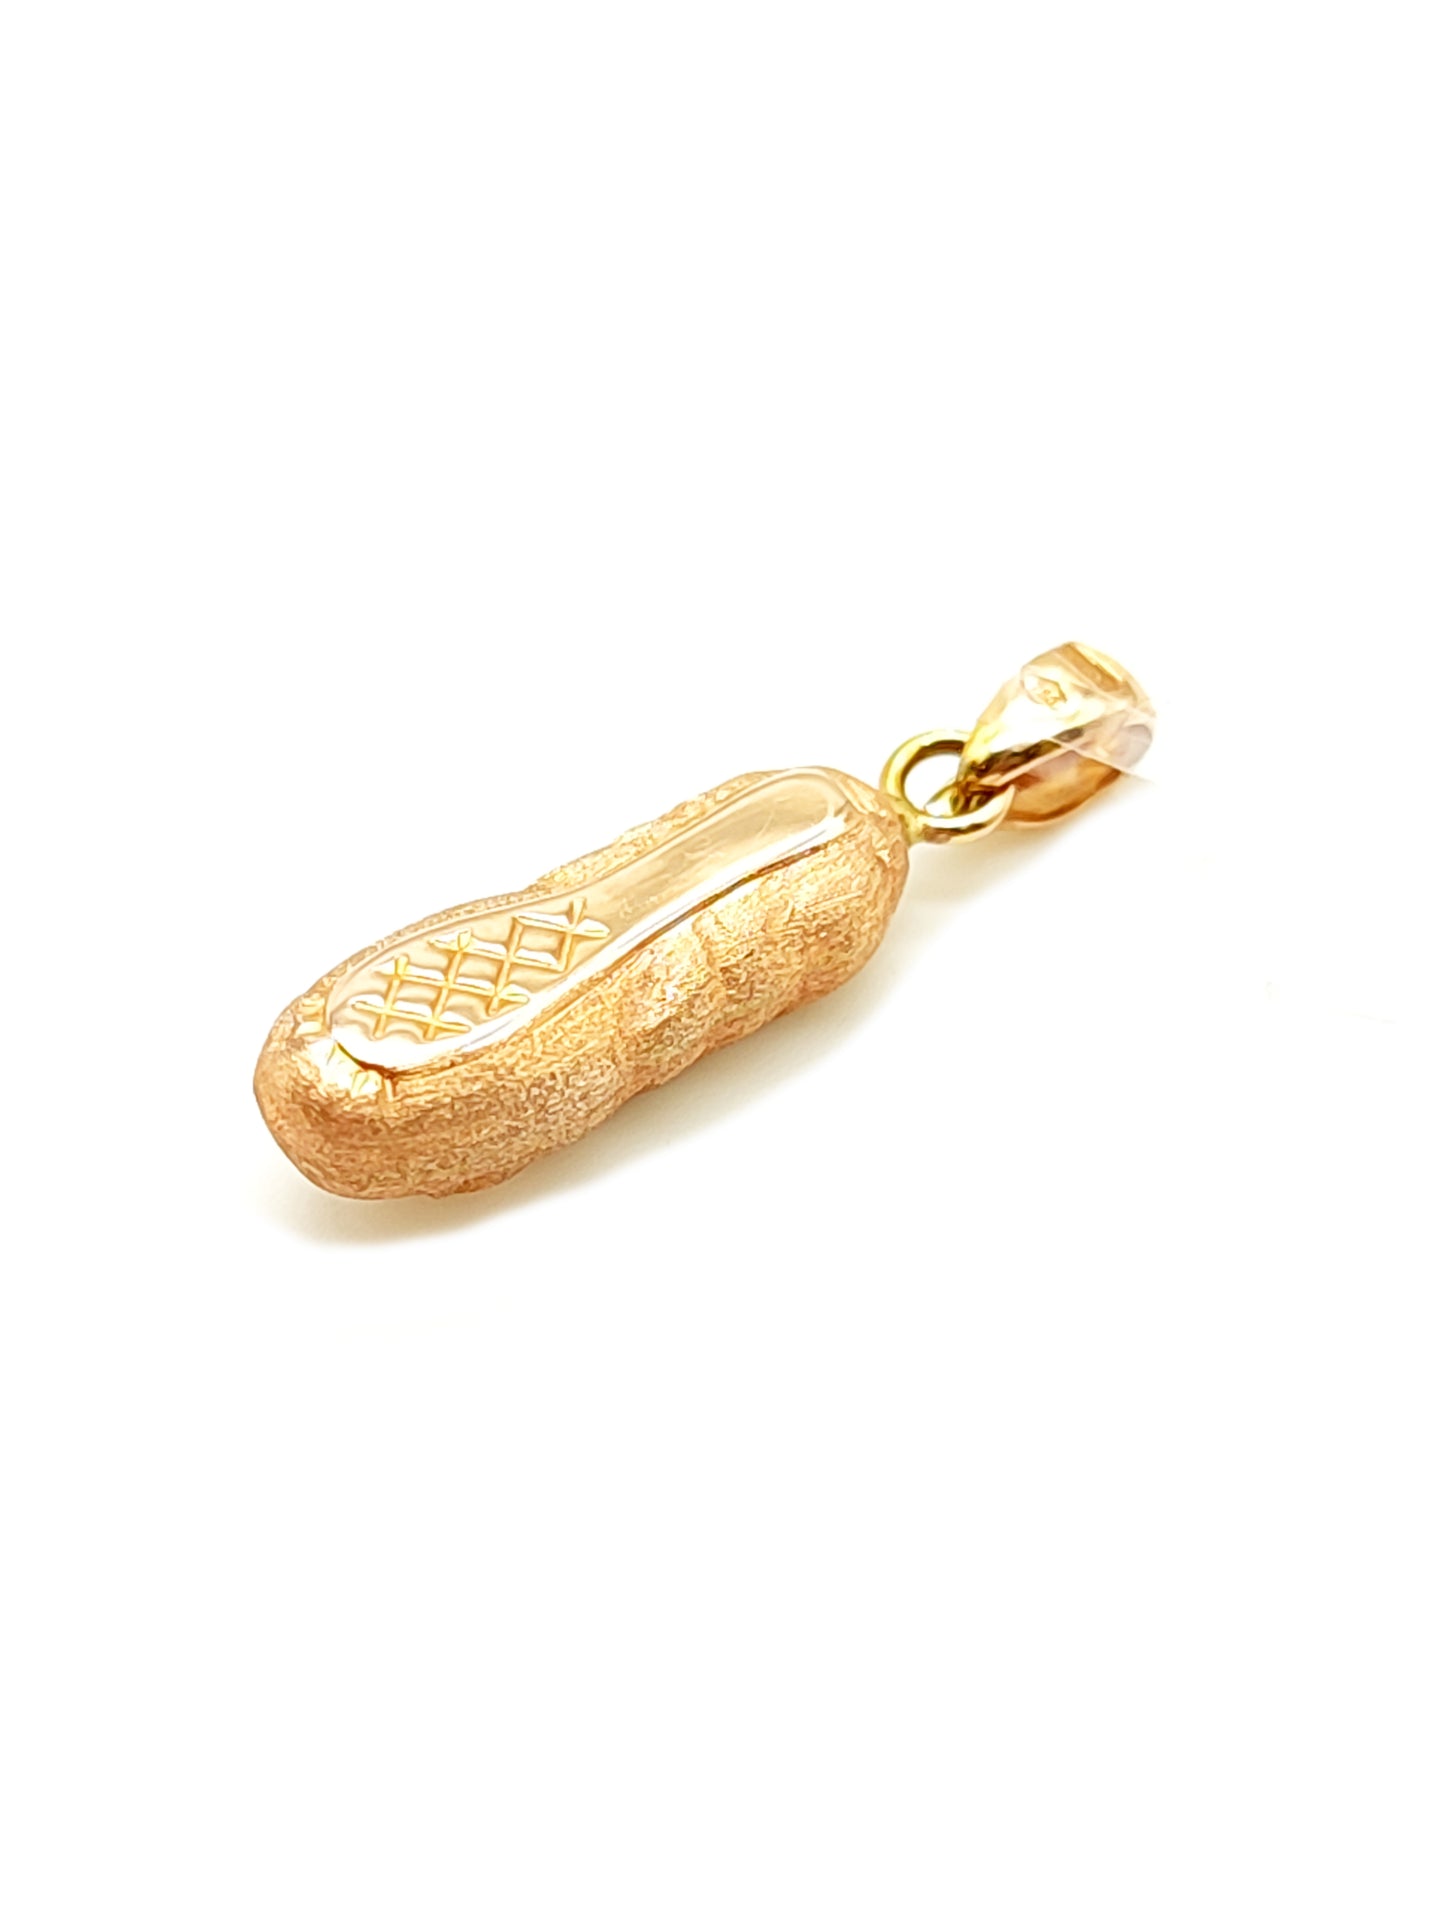 Ballerina shoe pendant in gold